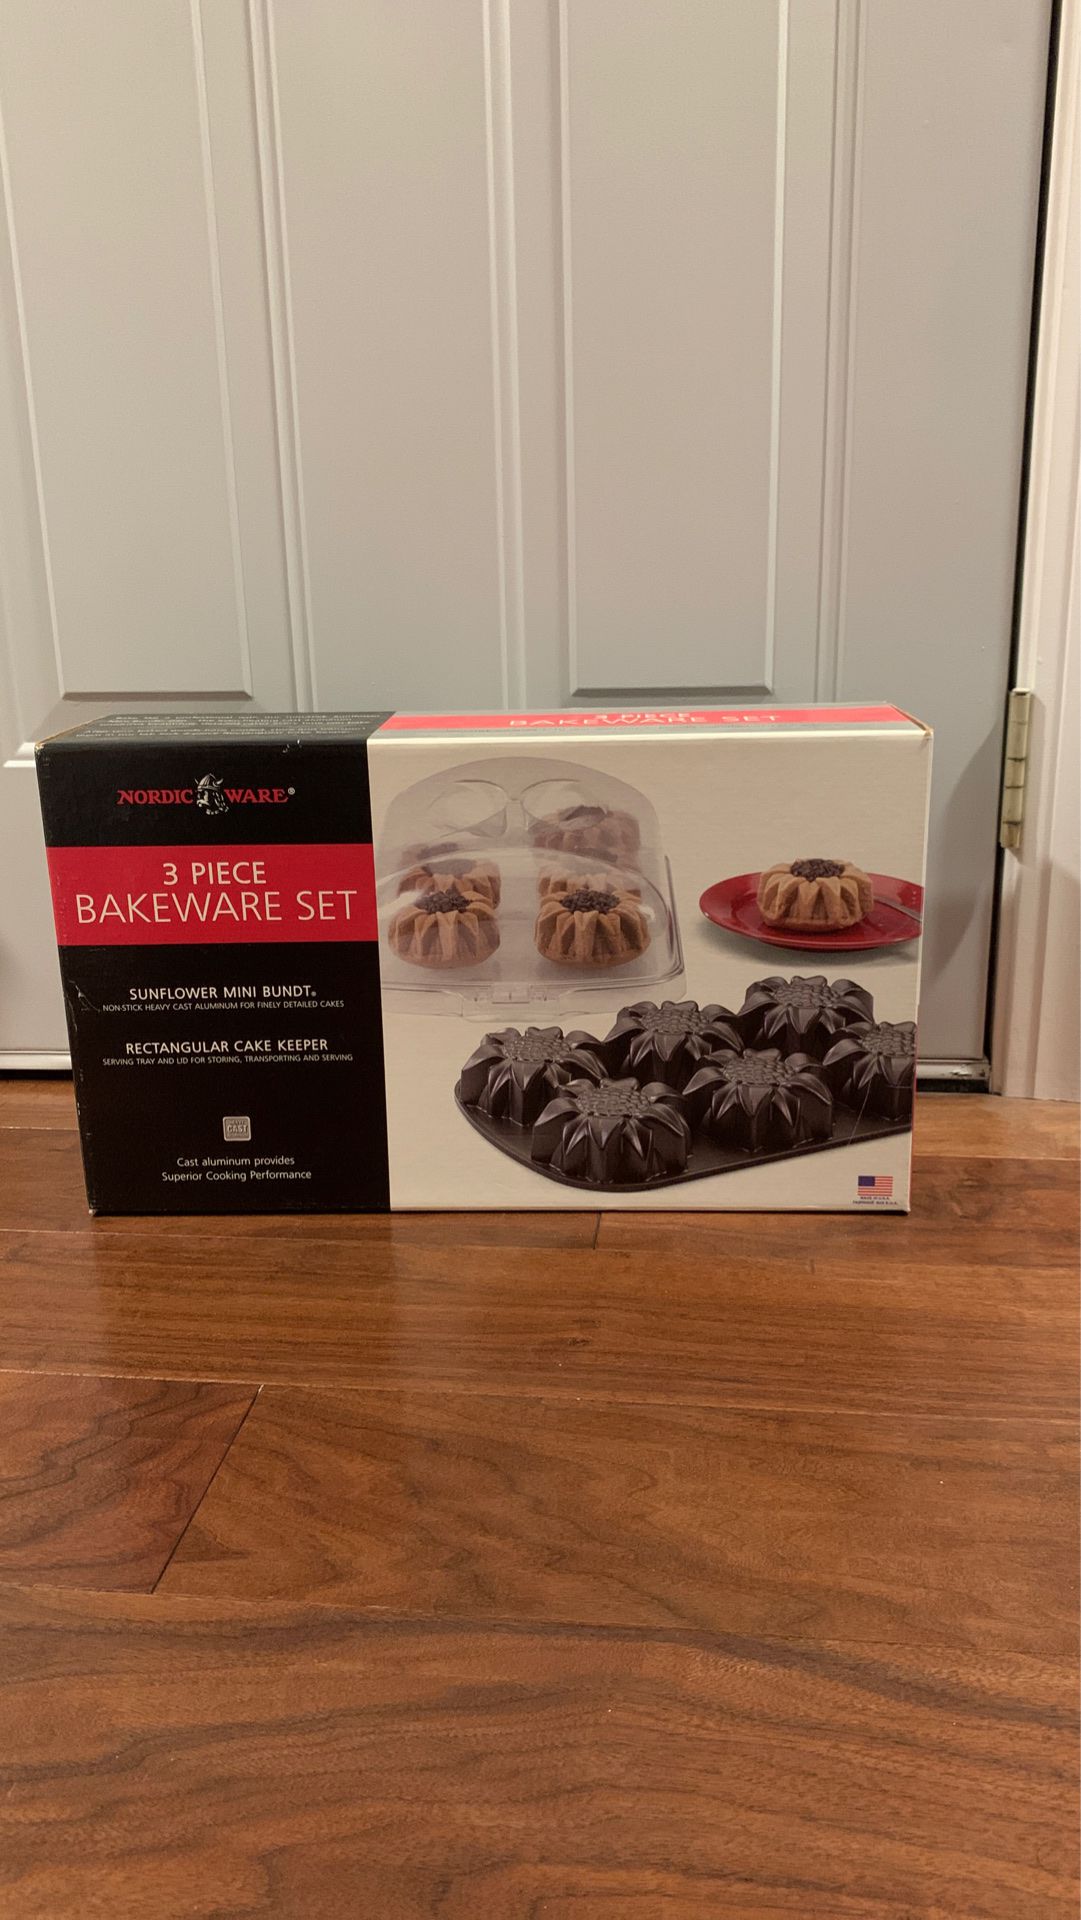 Bakeware set 3 piece - New in box